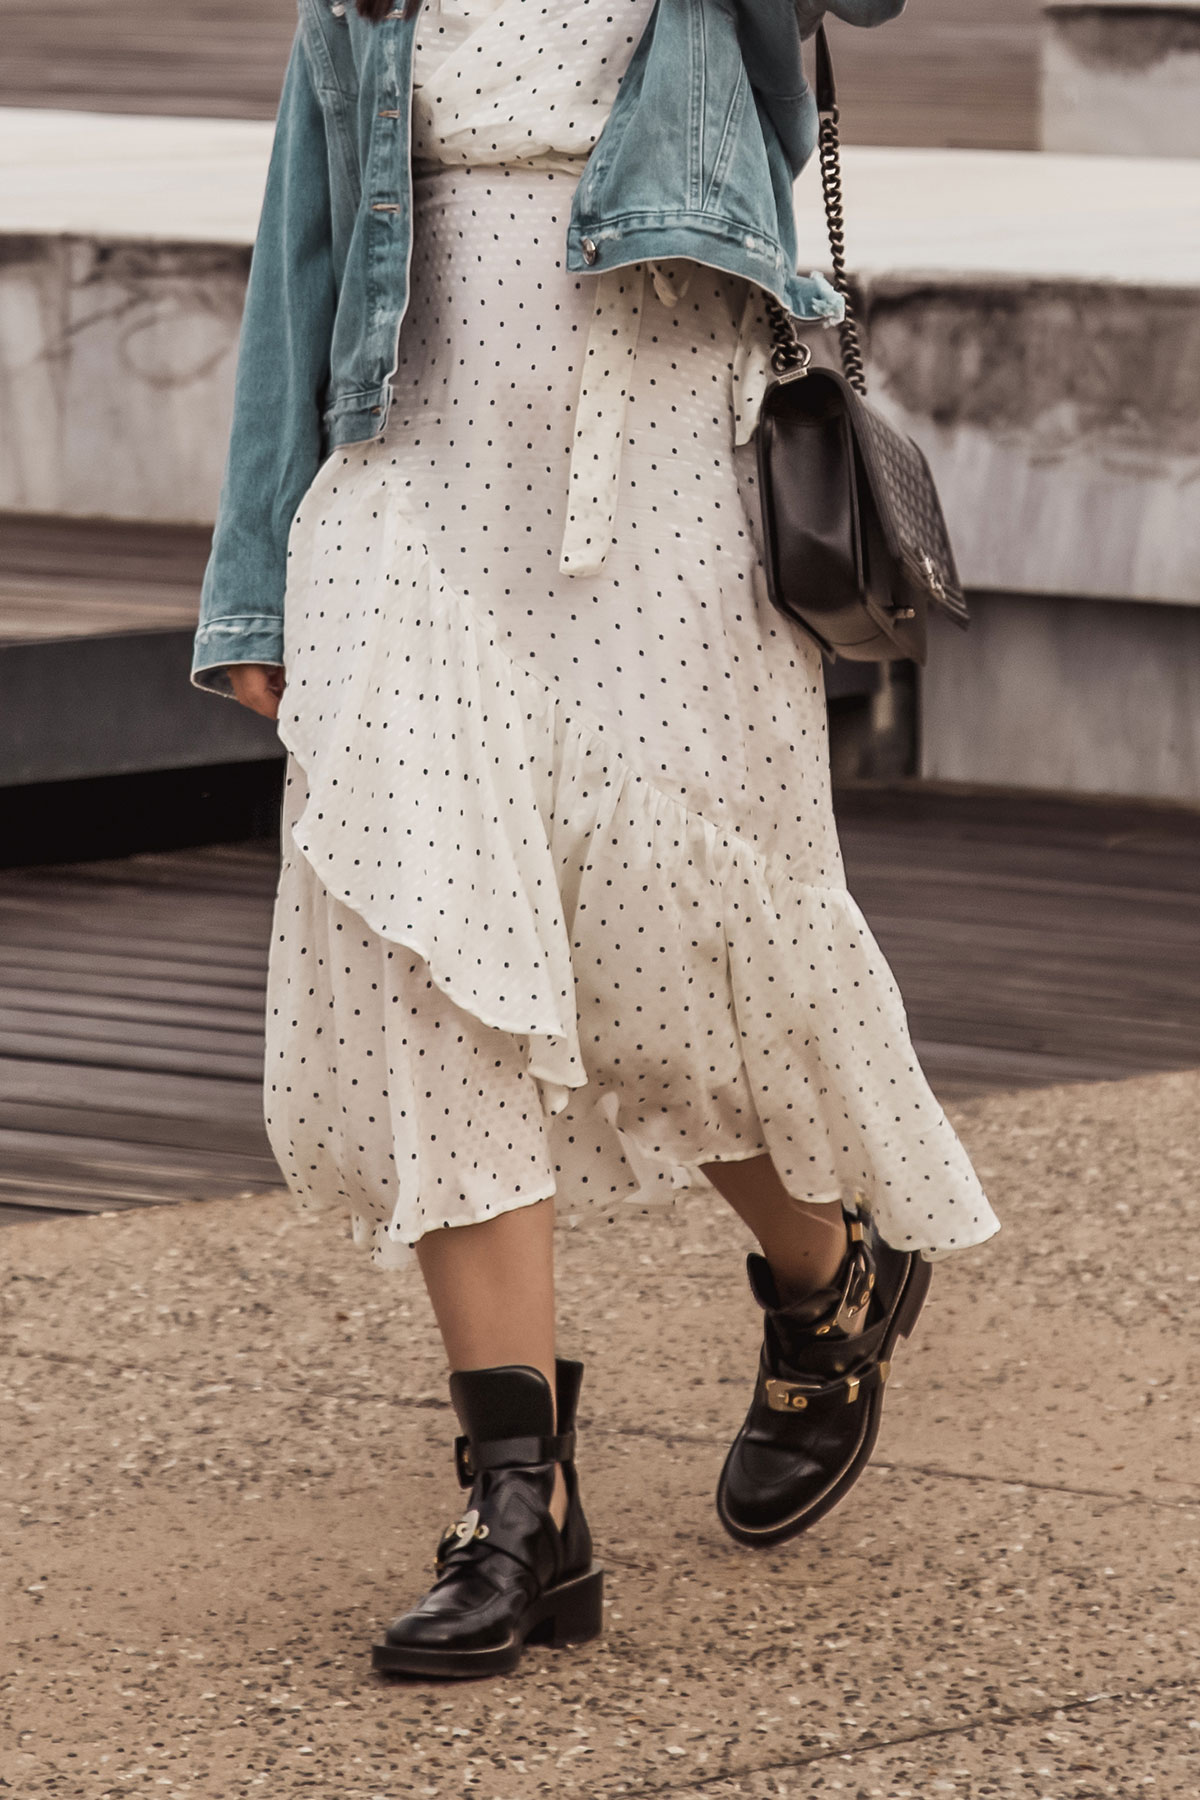 Polka Dot Dress & Edgy Boots | Stella Asteria - Fashion & Lifestyle Blog